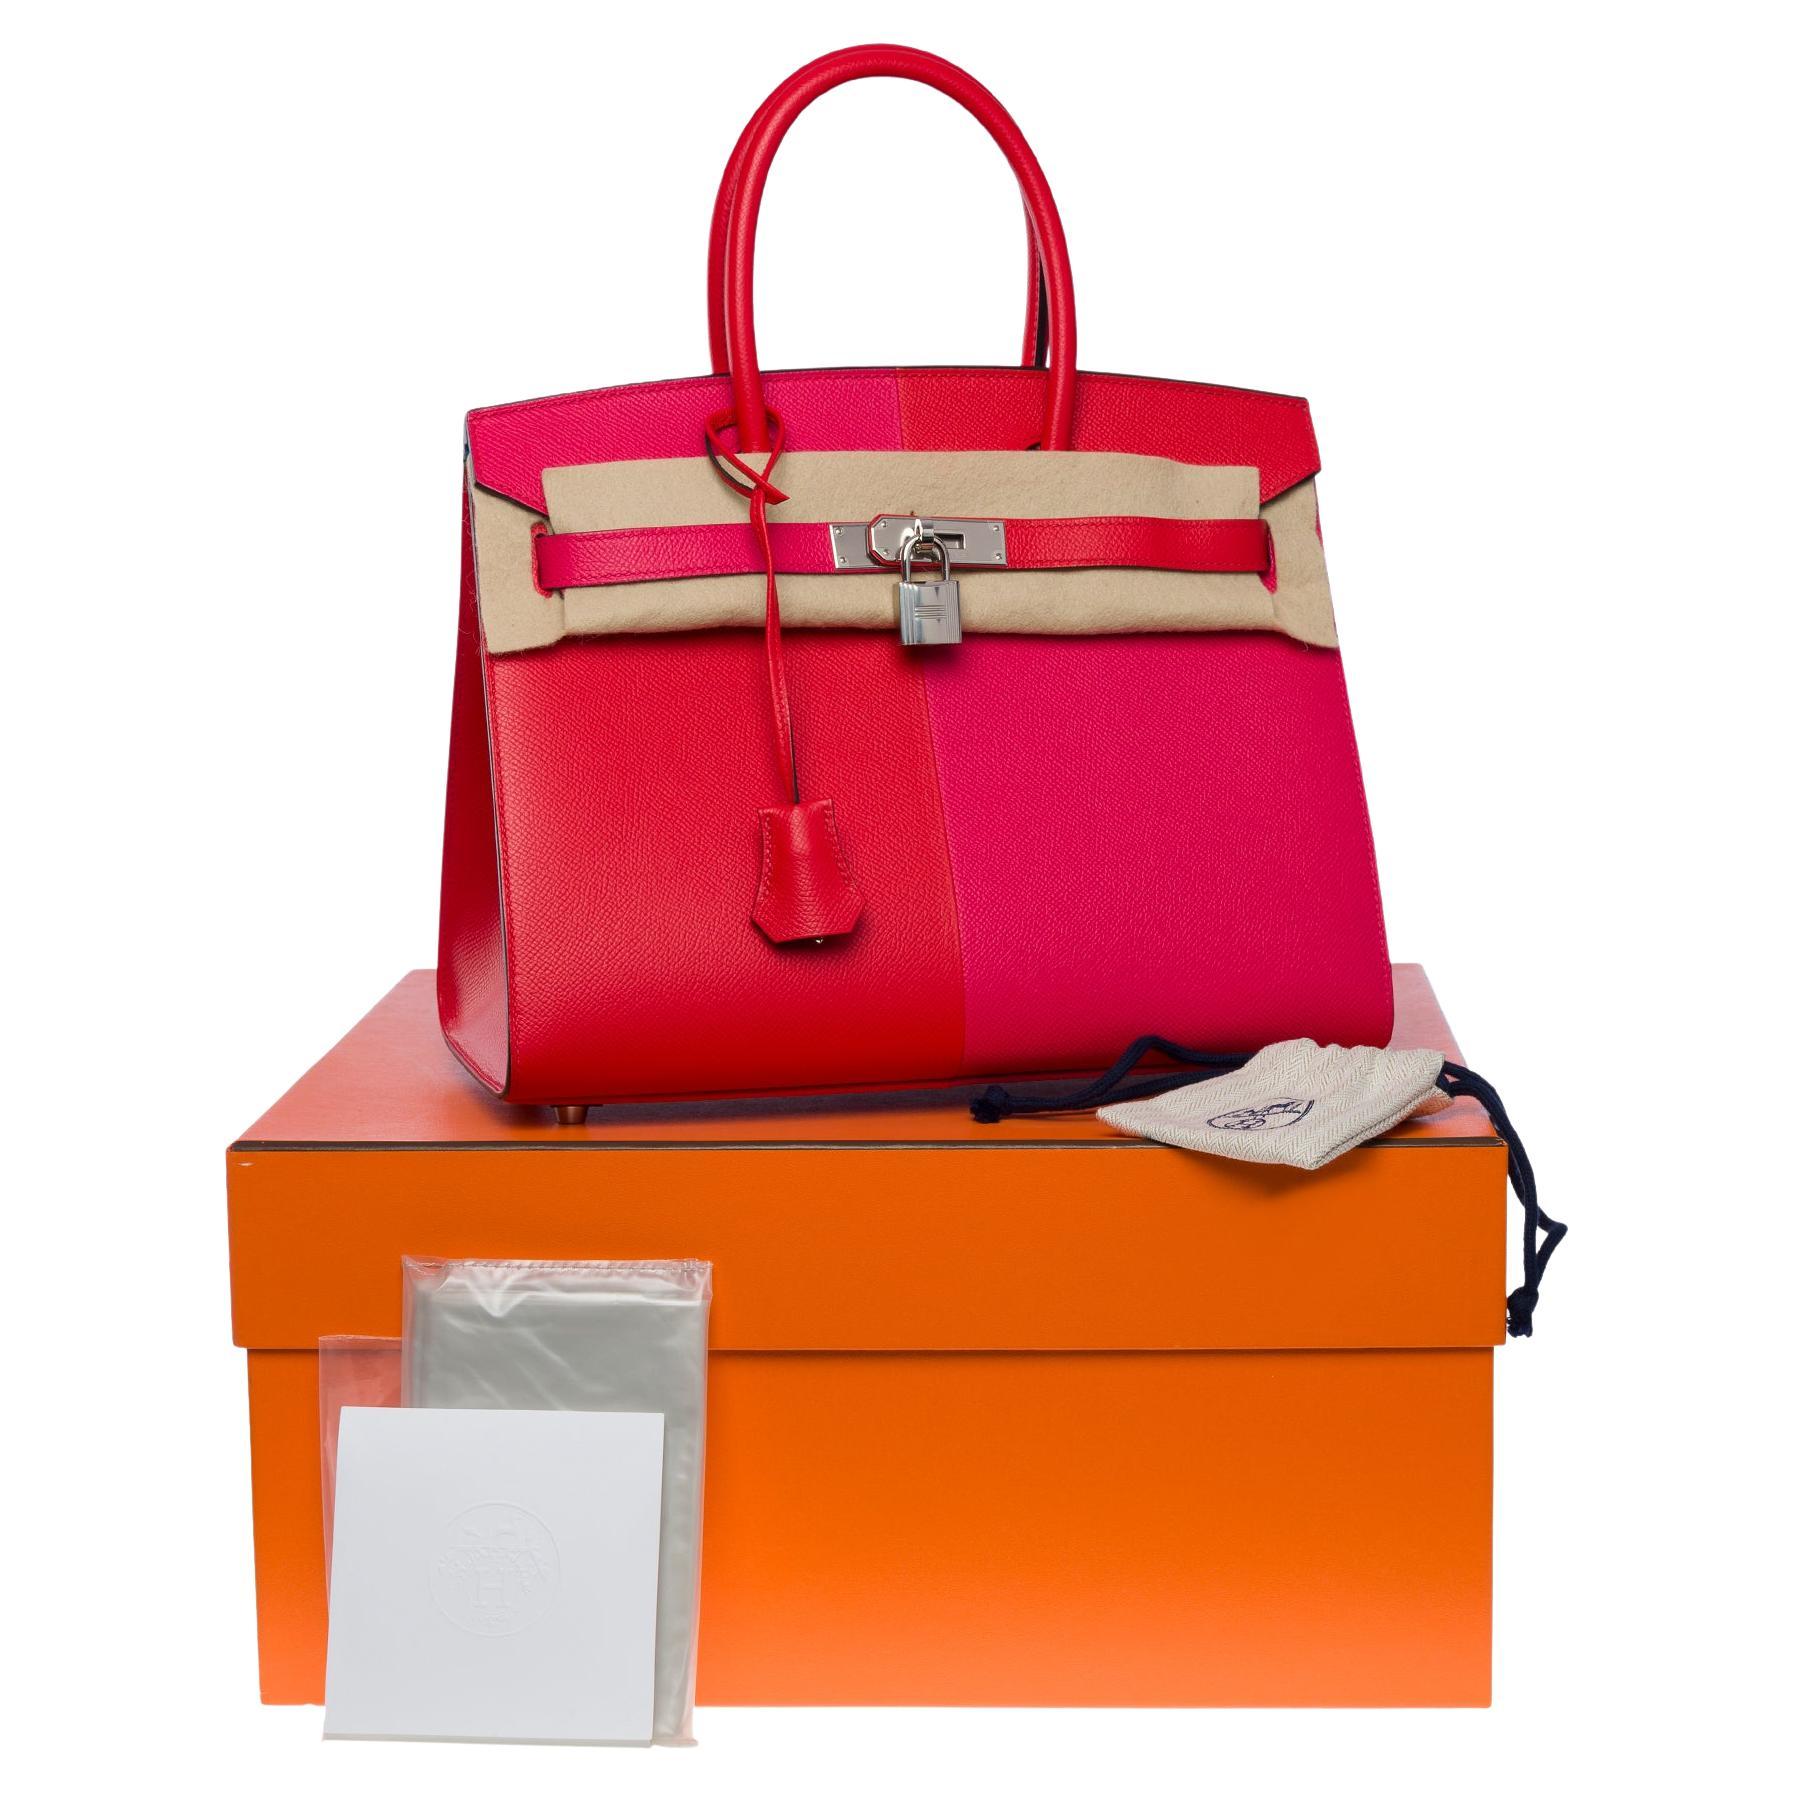 New Hermès Kazak Limited Edition Birkin 30 Handbag in Red/Pink Epsom Leather, SHW